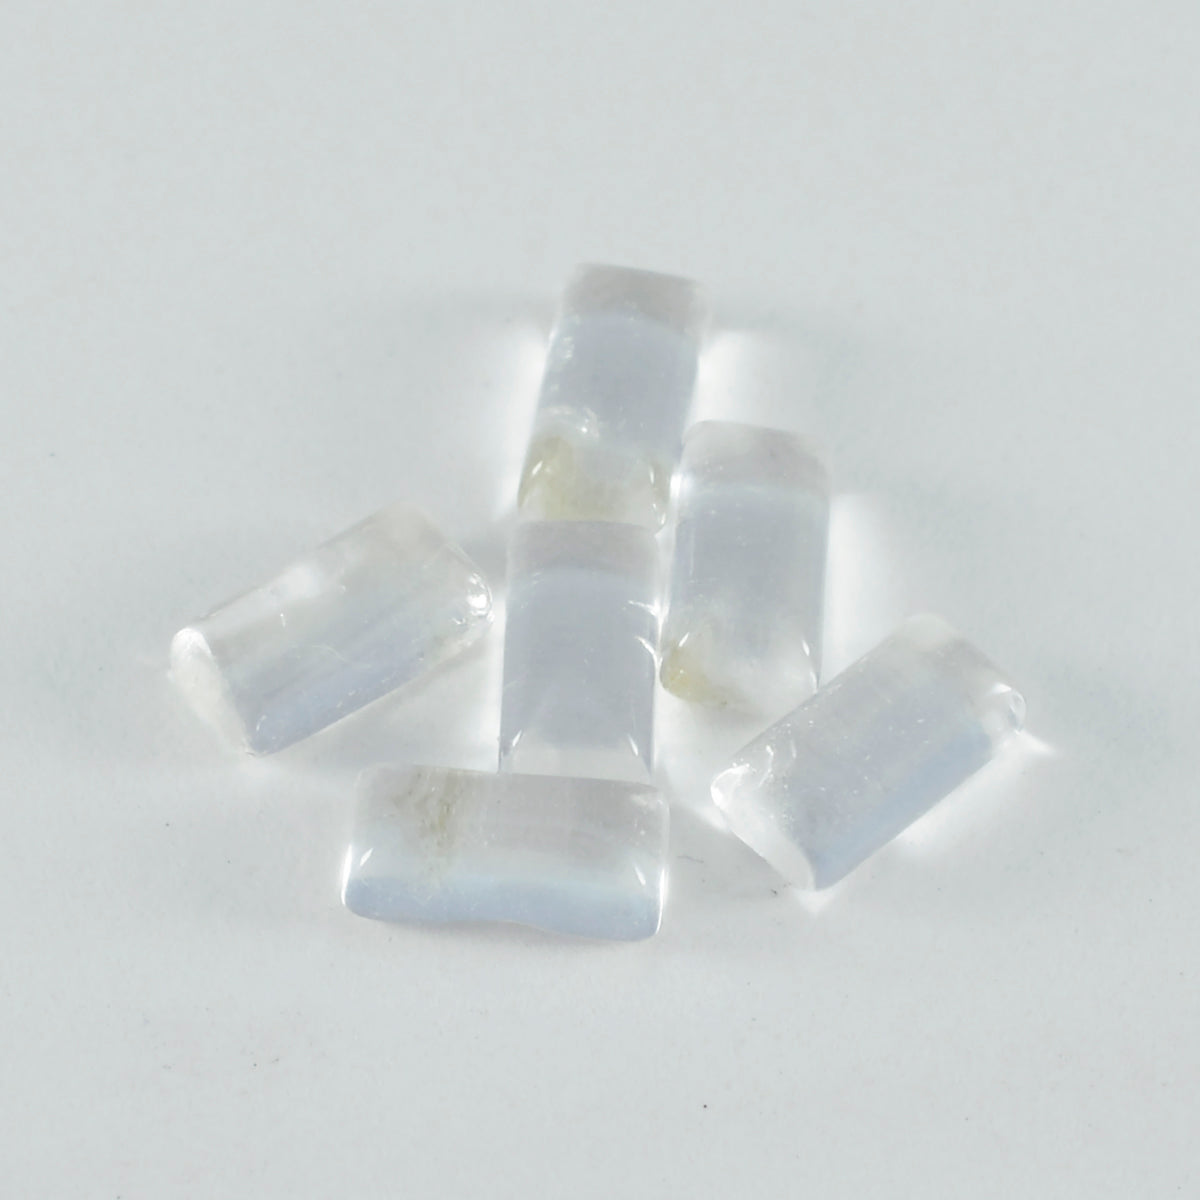 Riyogems 1PC Wit Kristal Kwarts Cabochon 6x12 mm Baguett Vorm A1 Kwaliteit Losse Edelsteen